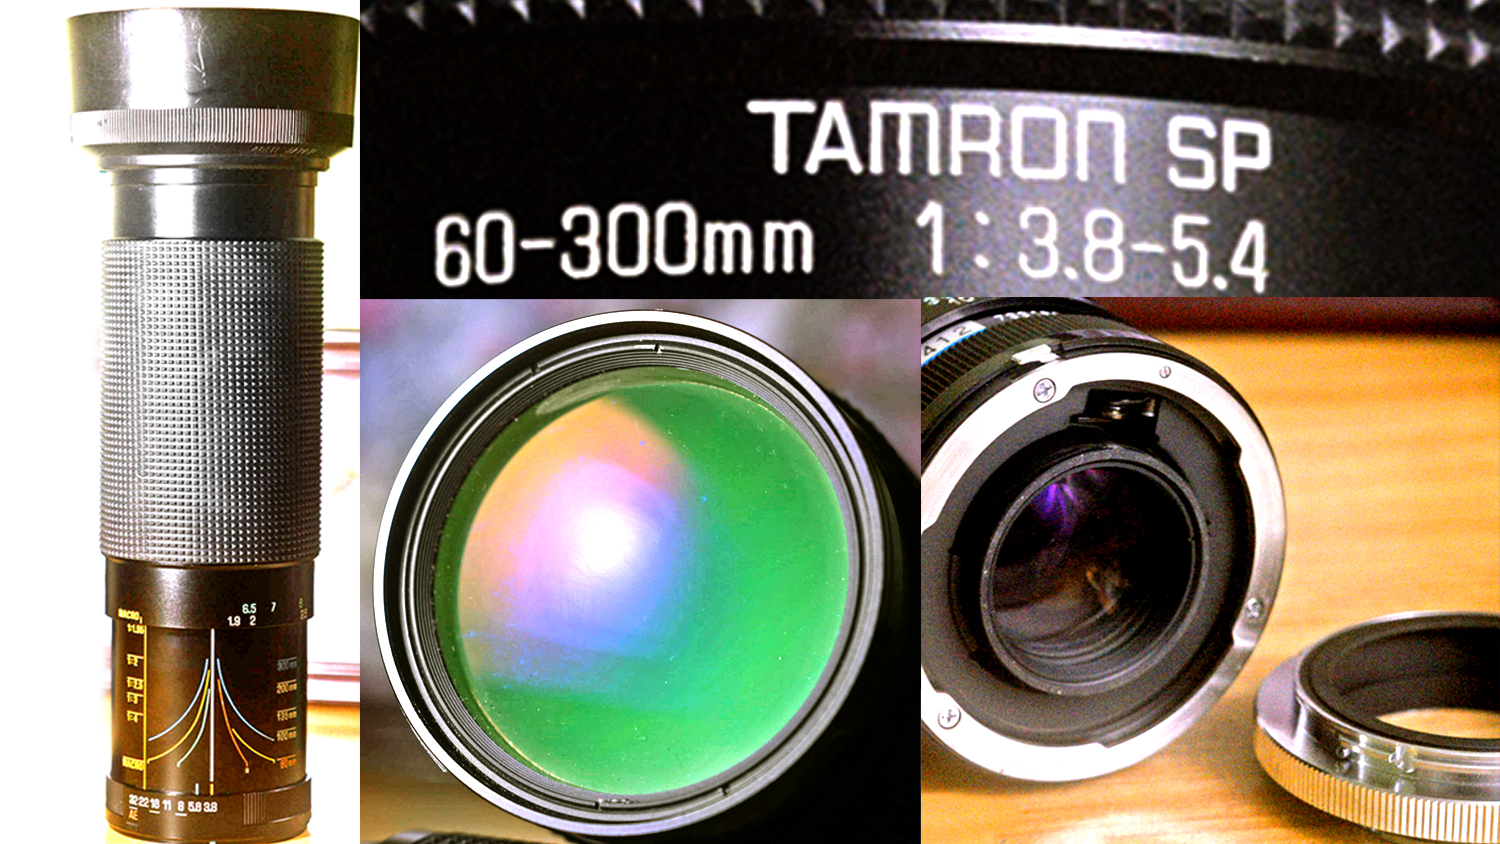 Tamron Adaptall-2 60-300mm f/3.8-5.4 SP Macro Zoom (Model 23A, 1983-2000)